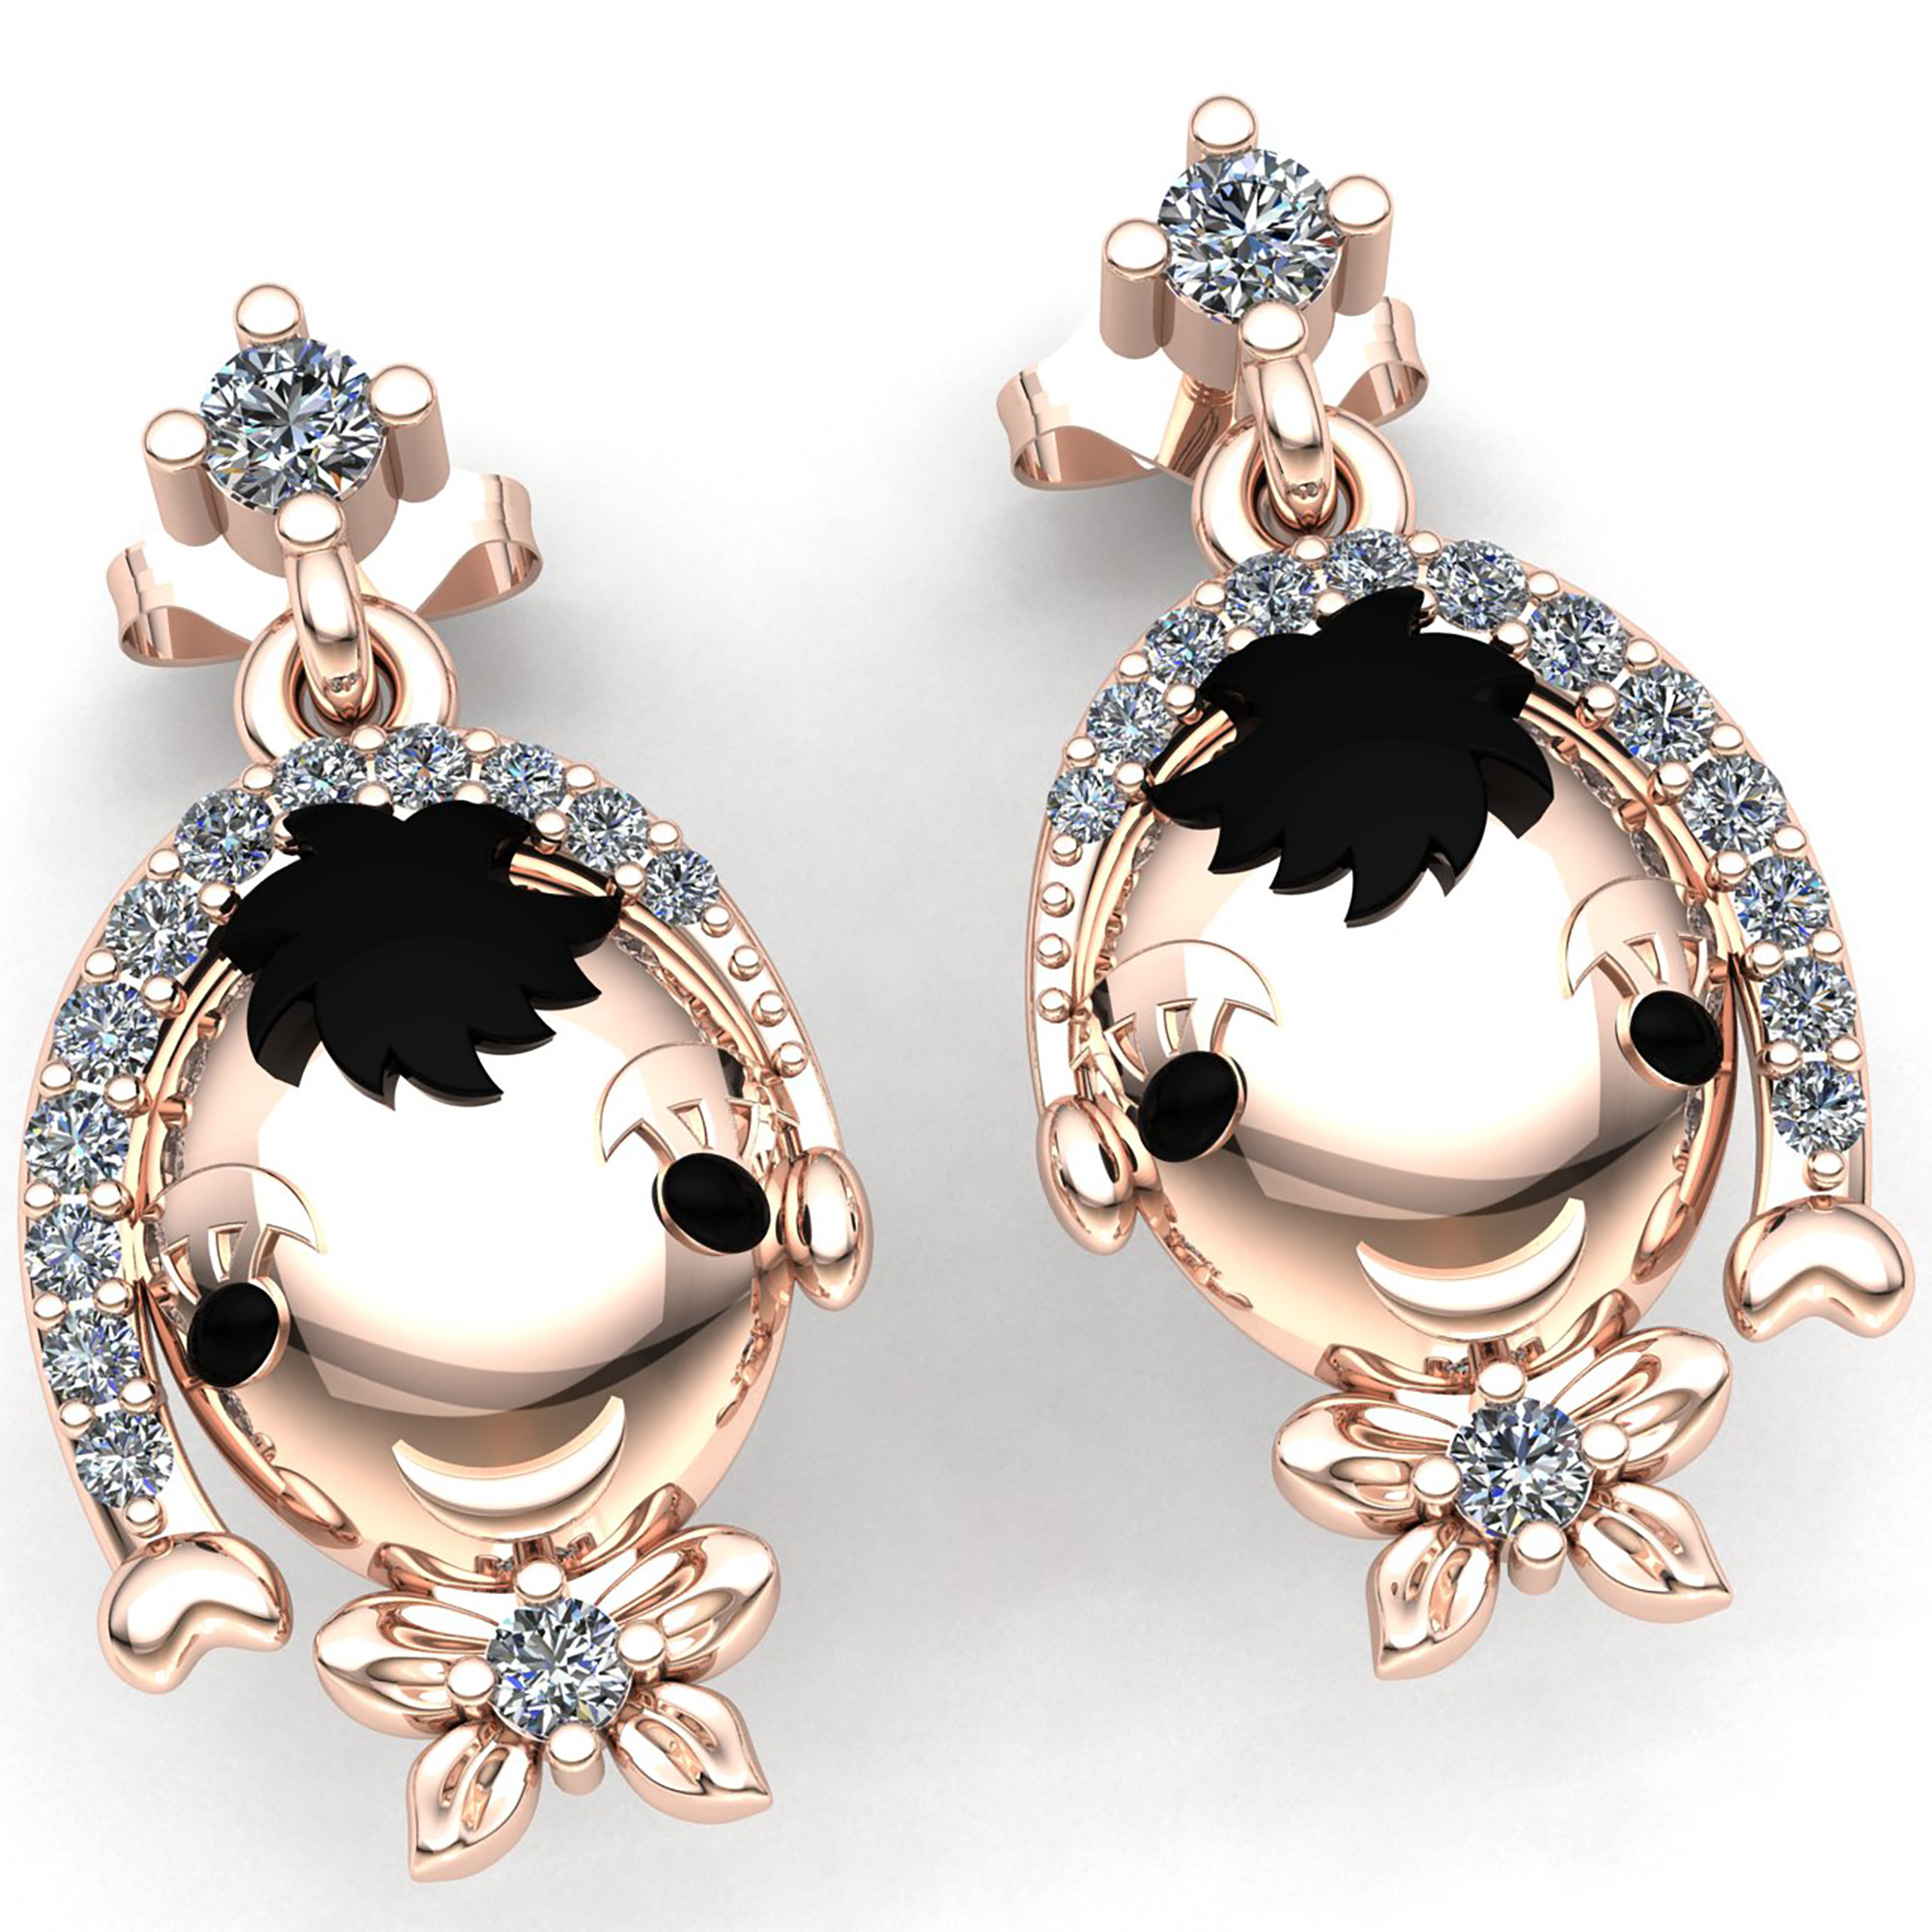 Jewel We Sell Genuine 3carat Round Cut Diamond Fancy Kids Earrings 10K White, Yellow or Rose Gold H SI2